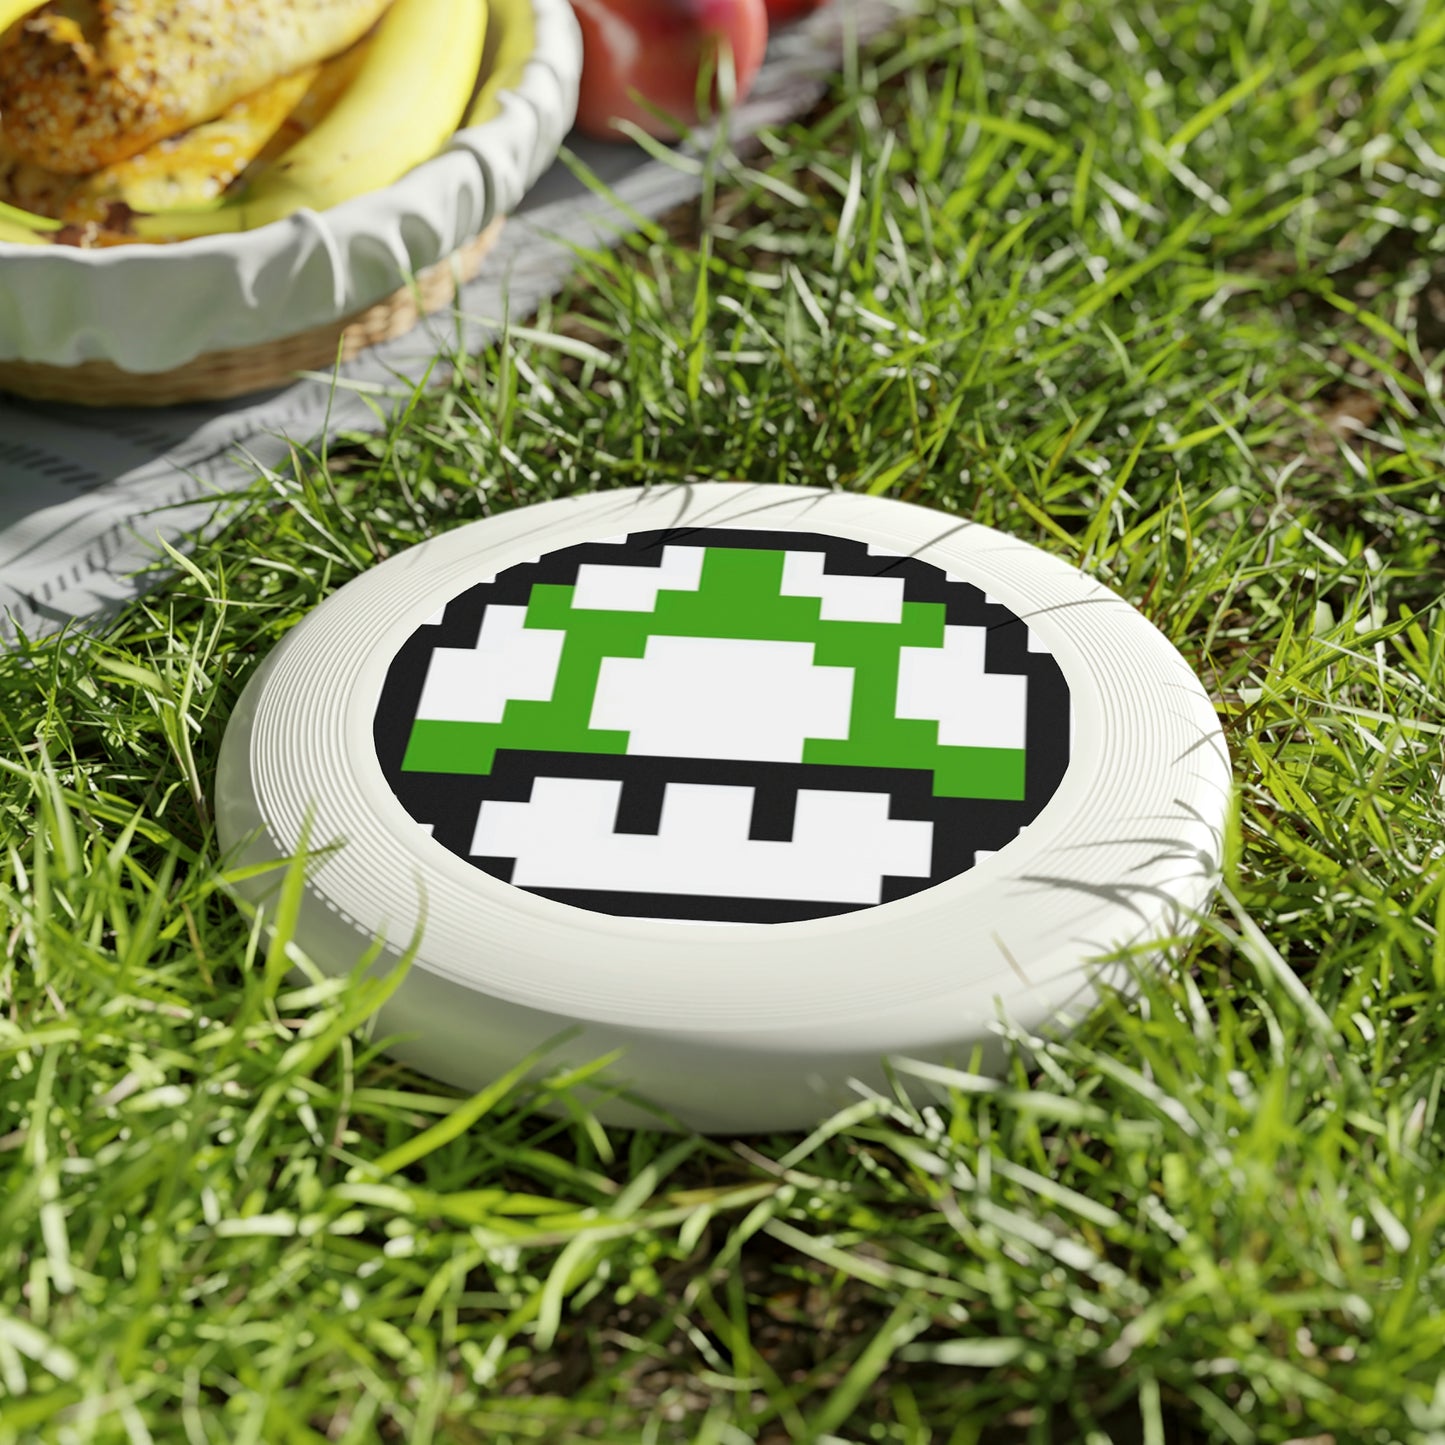 Green 8 Bit Style Mushroom Wham-O Frisbee